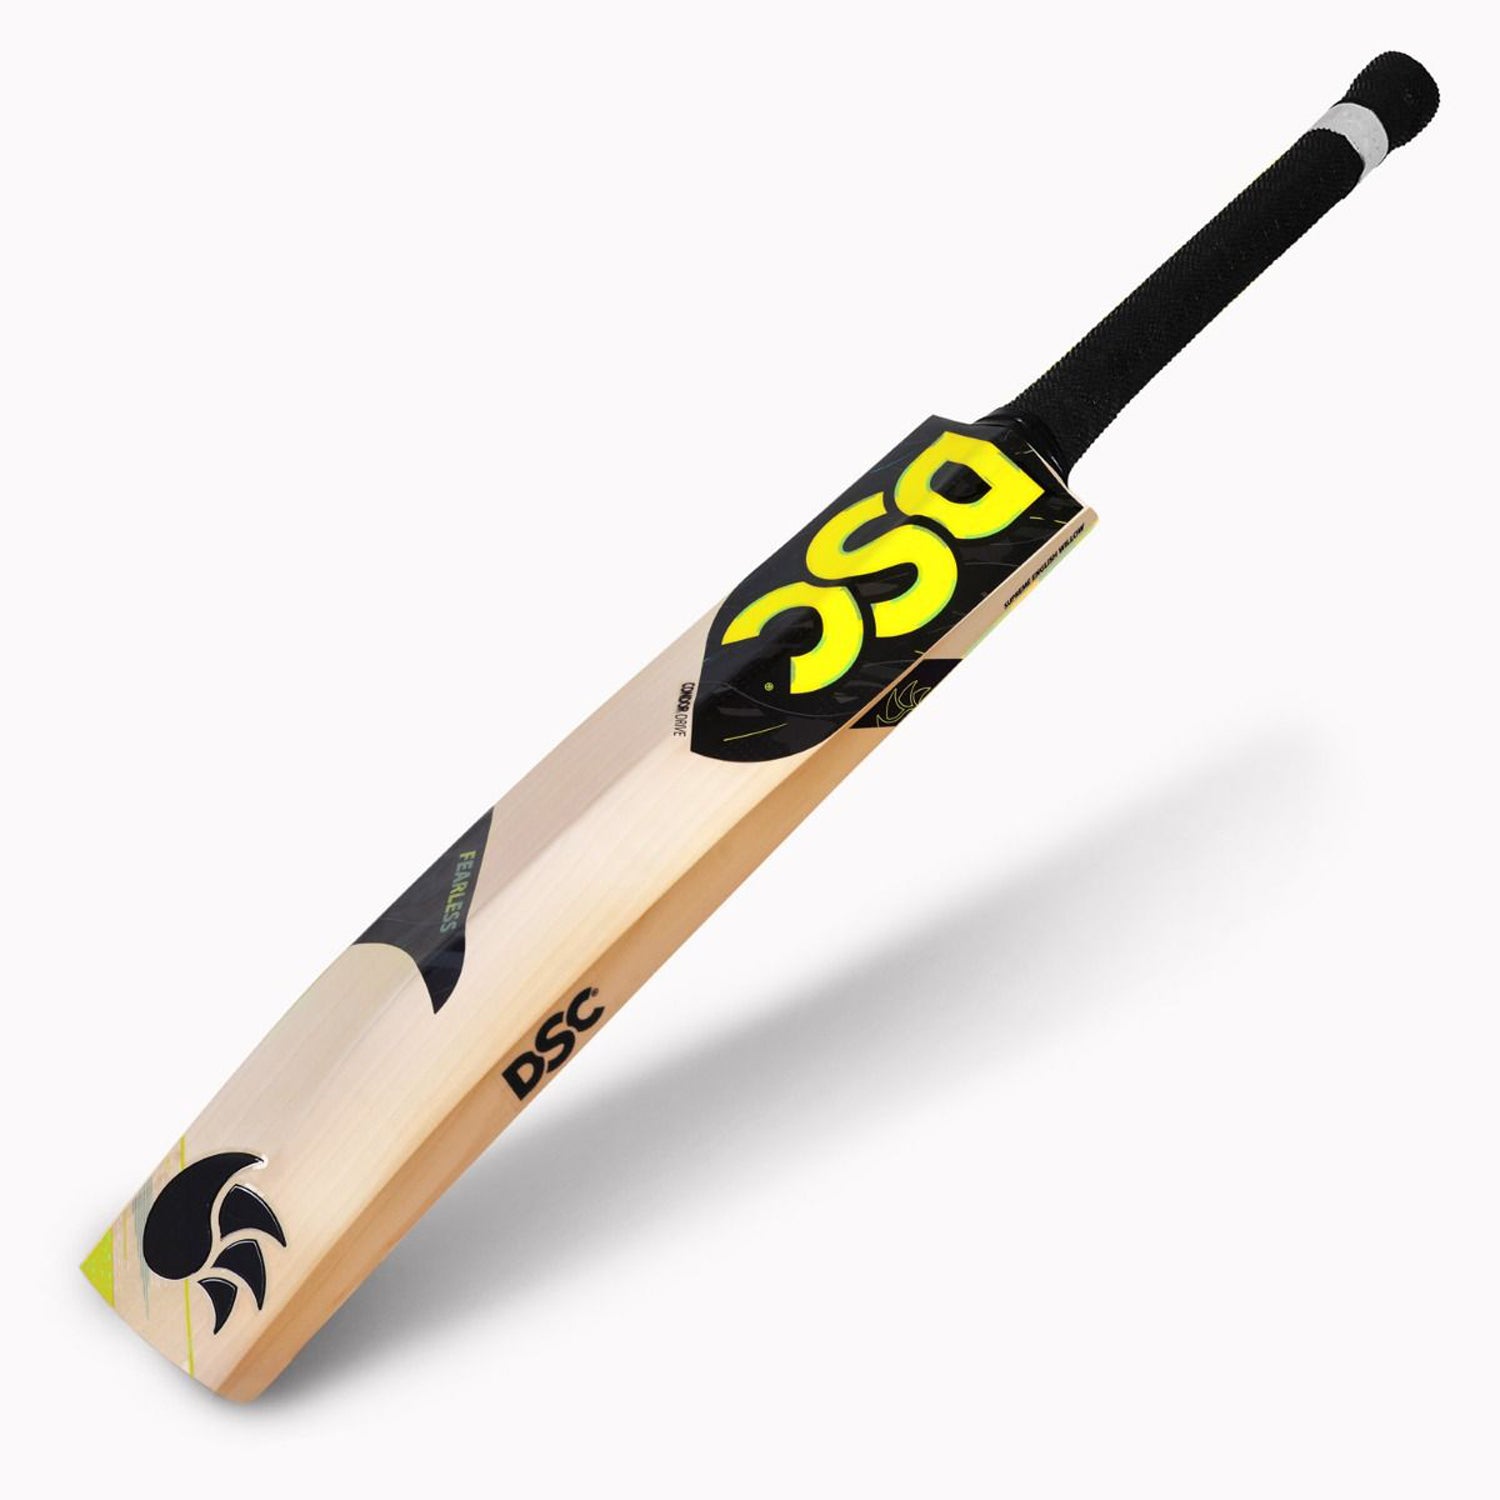 DSC Condor Drive English Willow Cricket Bat - Best Price online Prokicksports.com